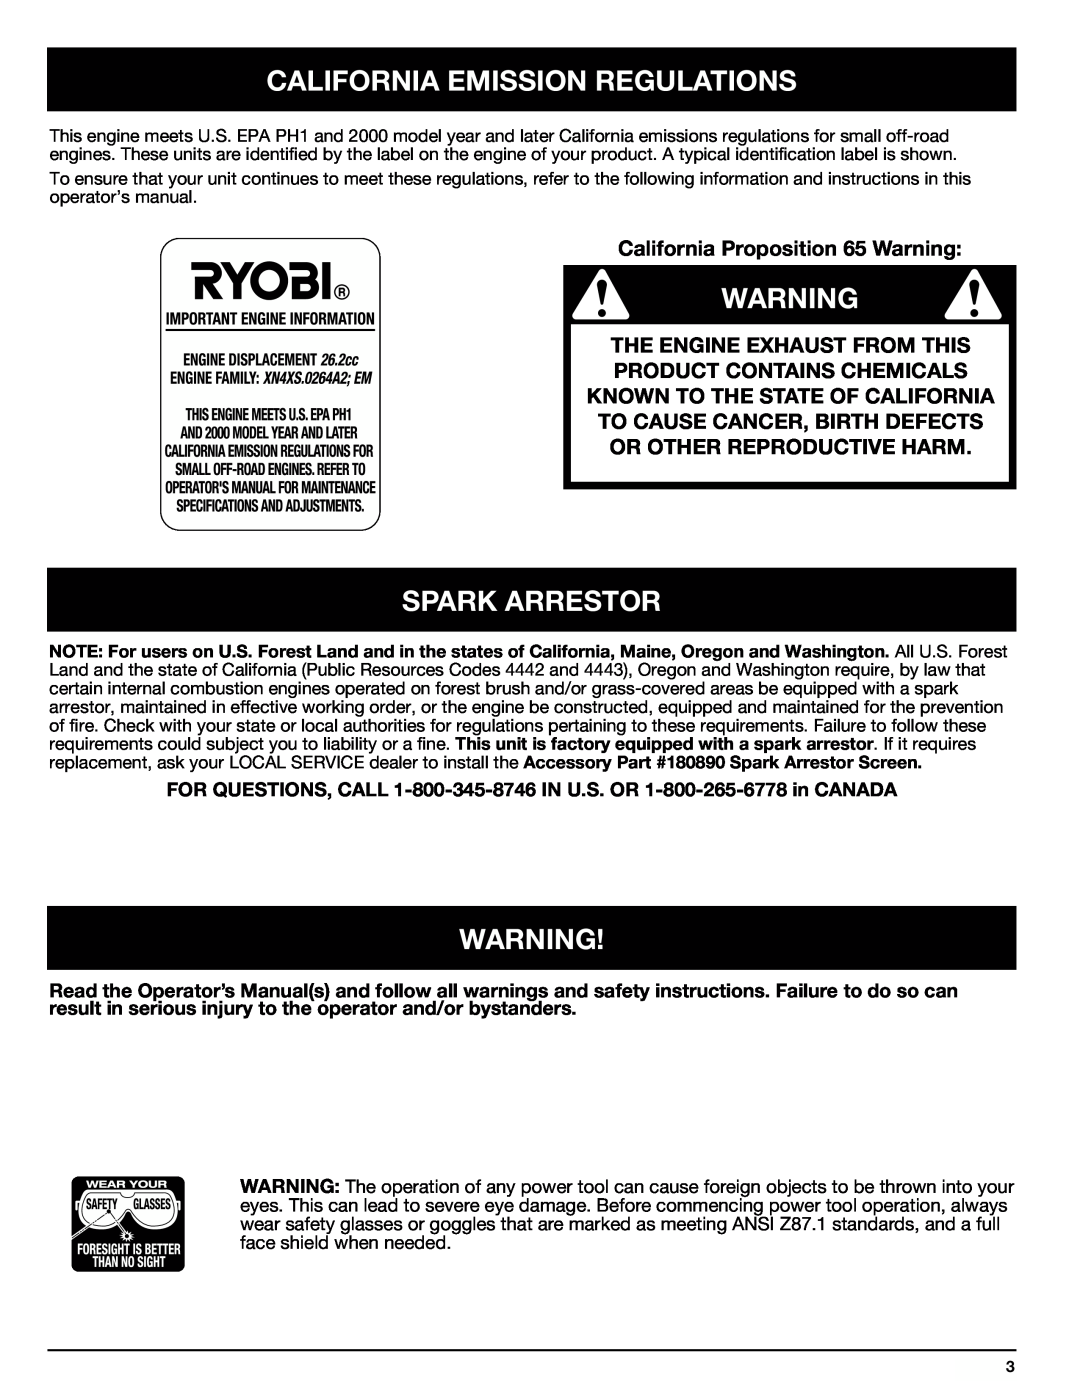 Ryobi Outdoor 510r manual California Emission Regulations, Spark Arrestor, California Proposition 65 Warning 